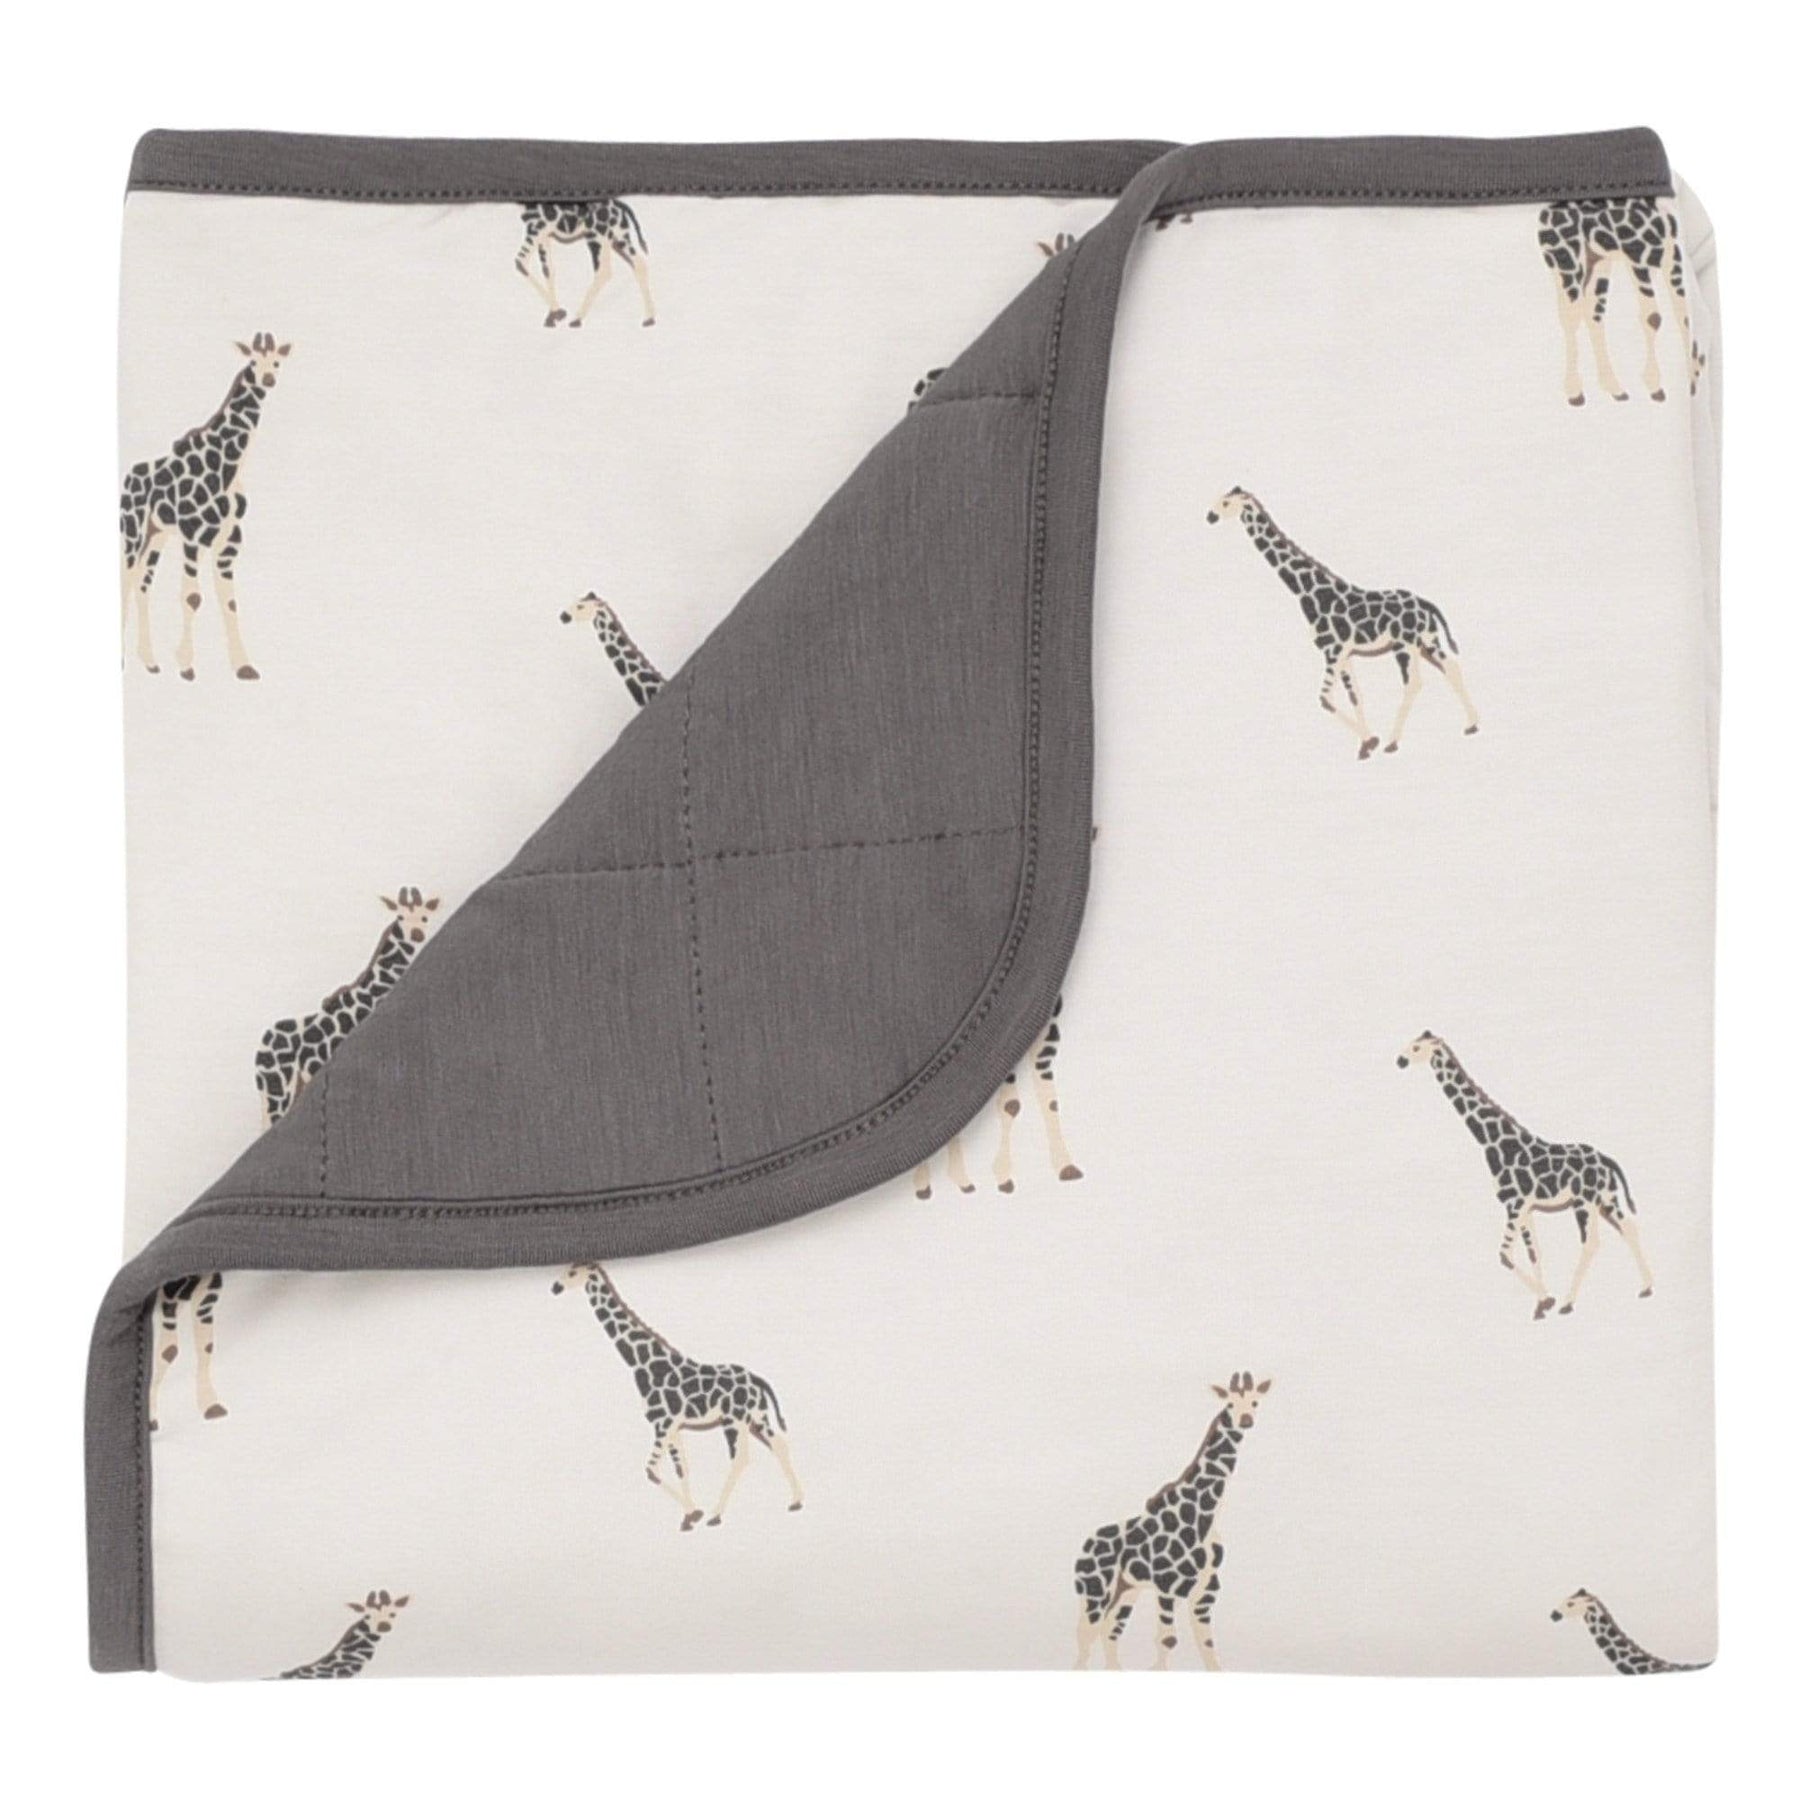 Kyte BABY Baby Blanket Giraffe / Infant / 1.0 Tog Printed Baby Blanket in Giraffe